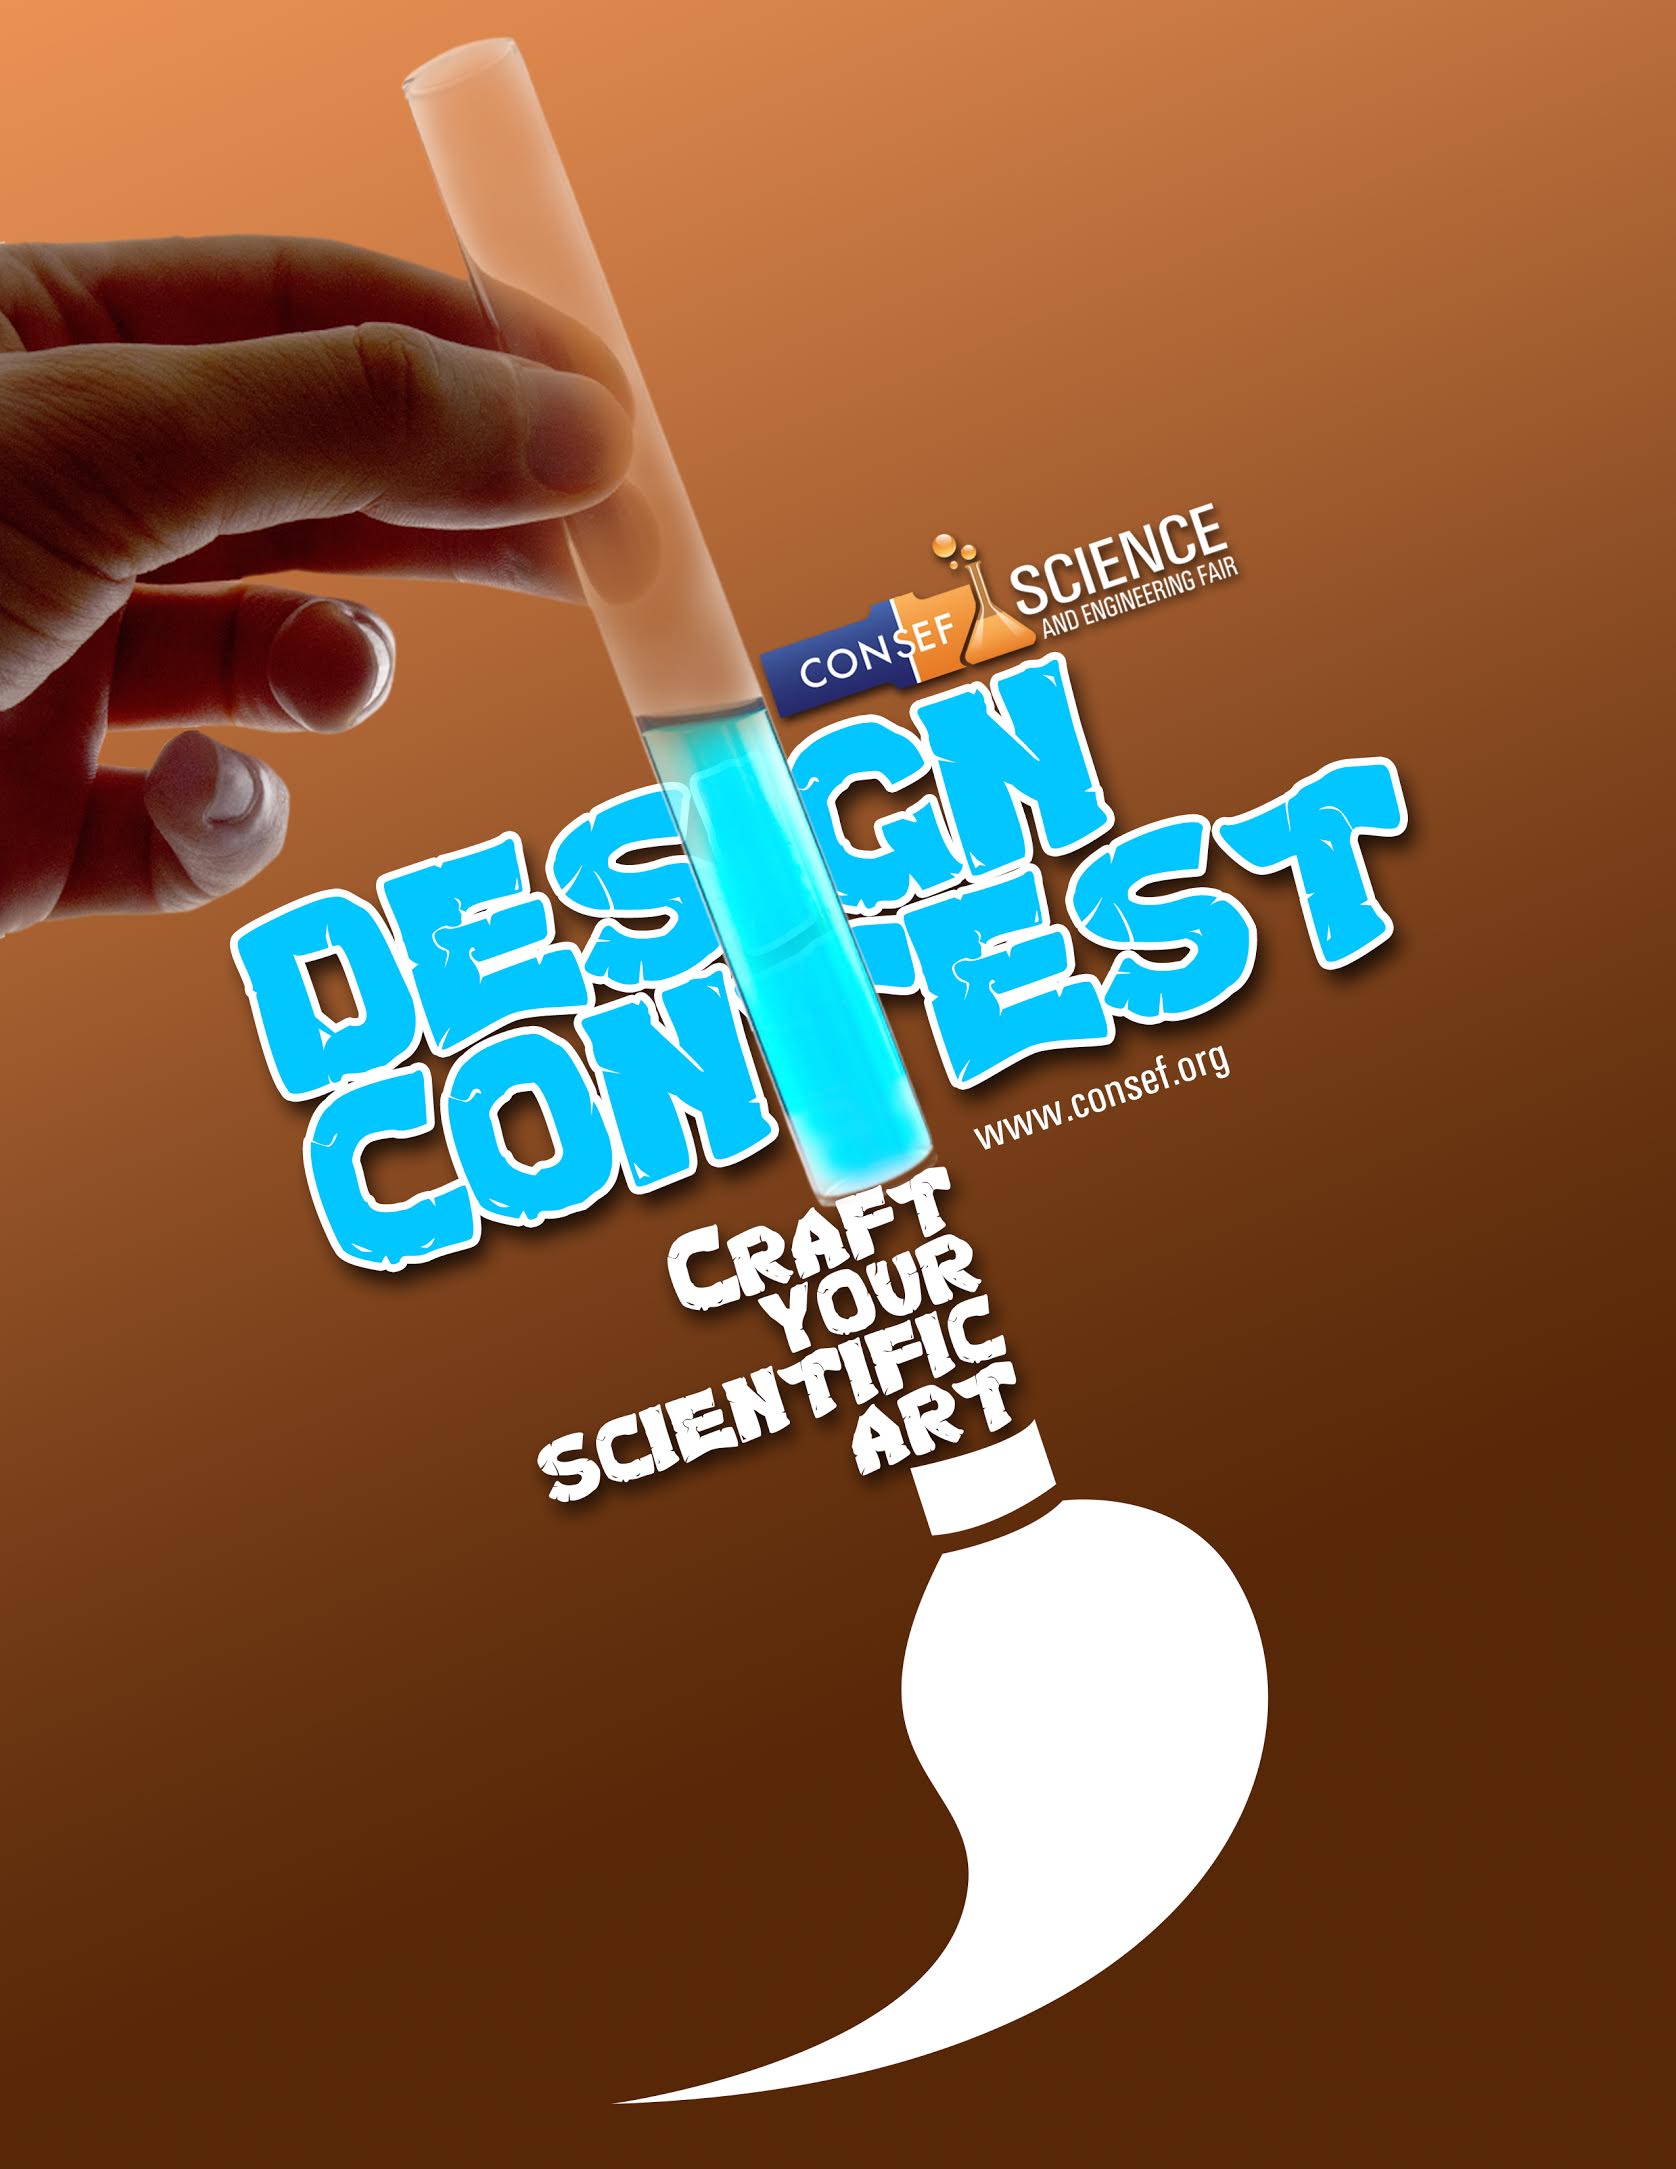 contest banner design